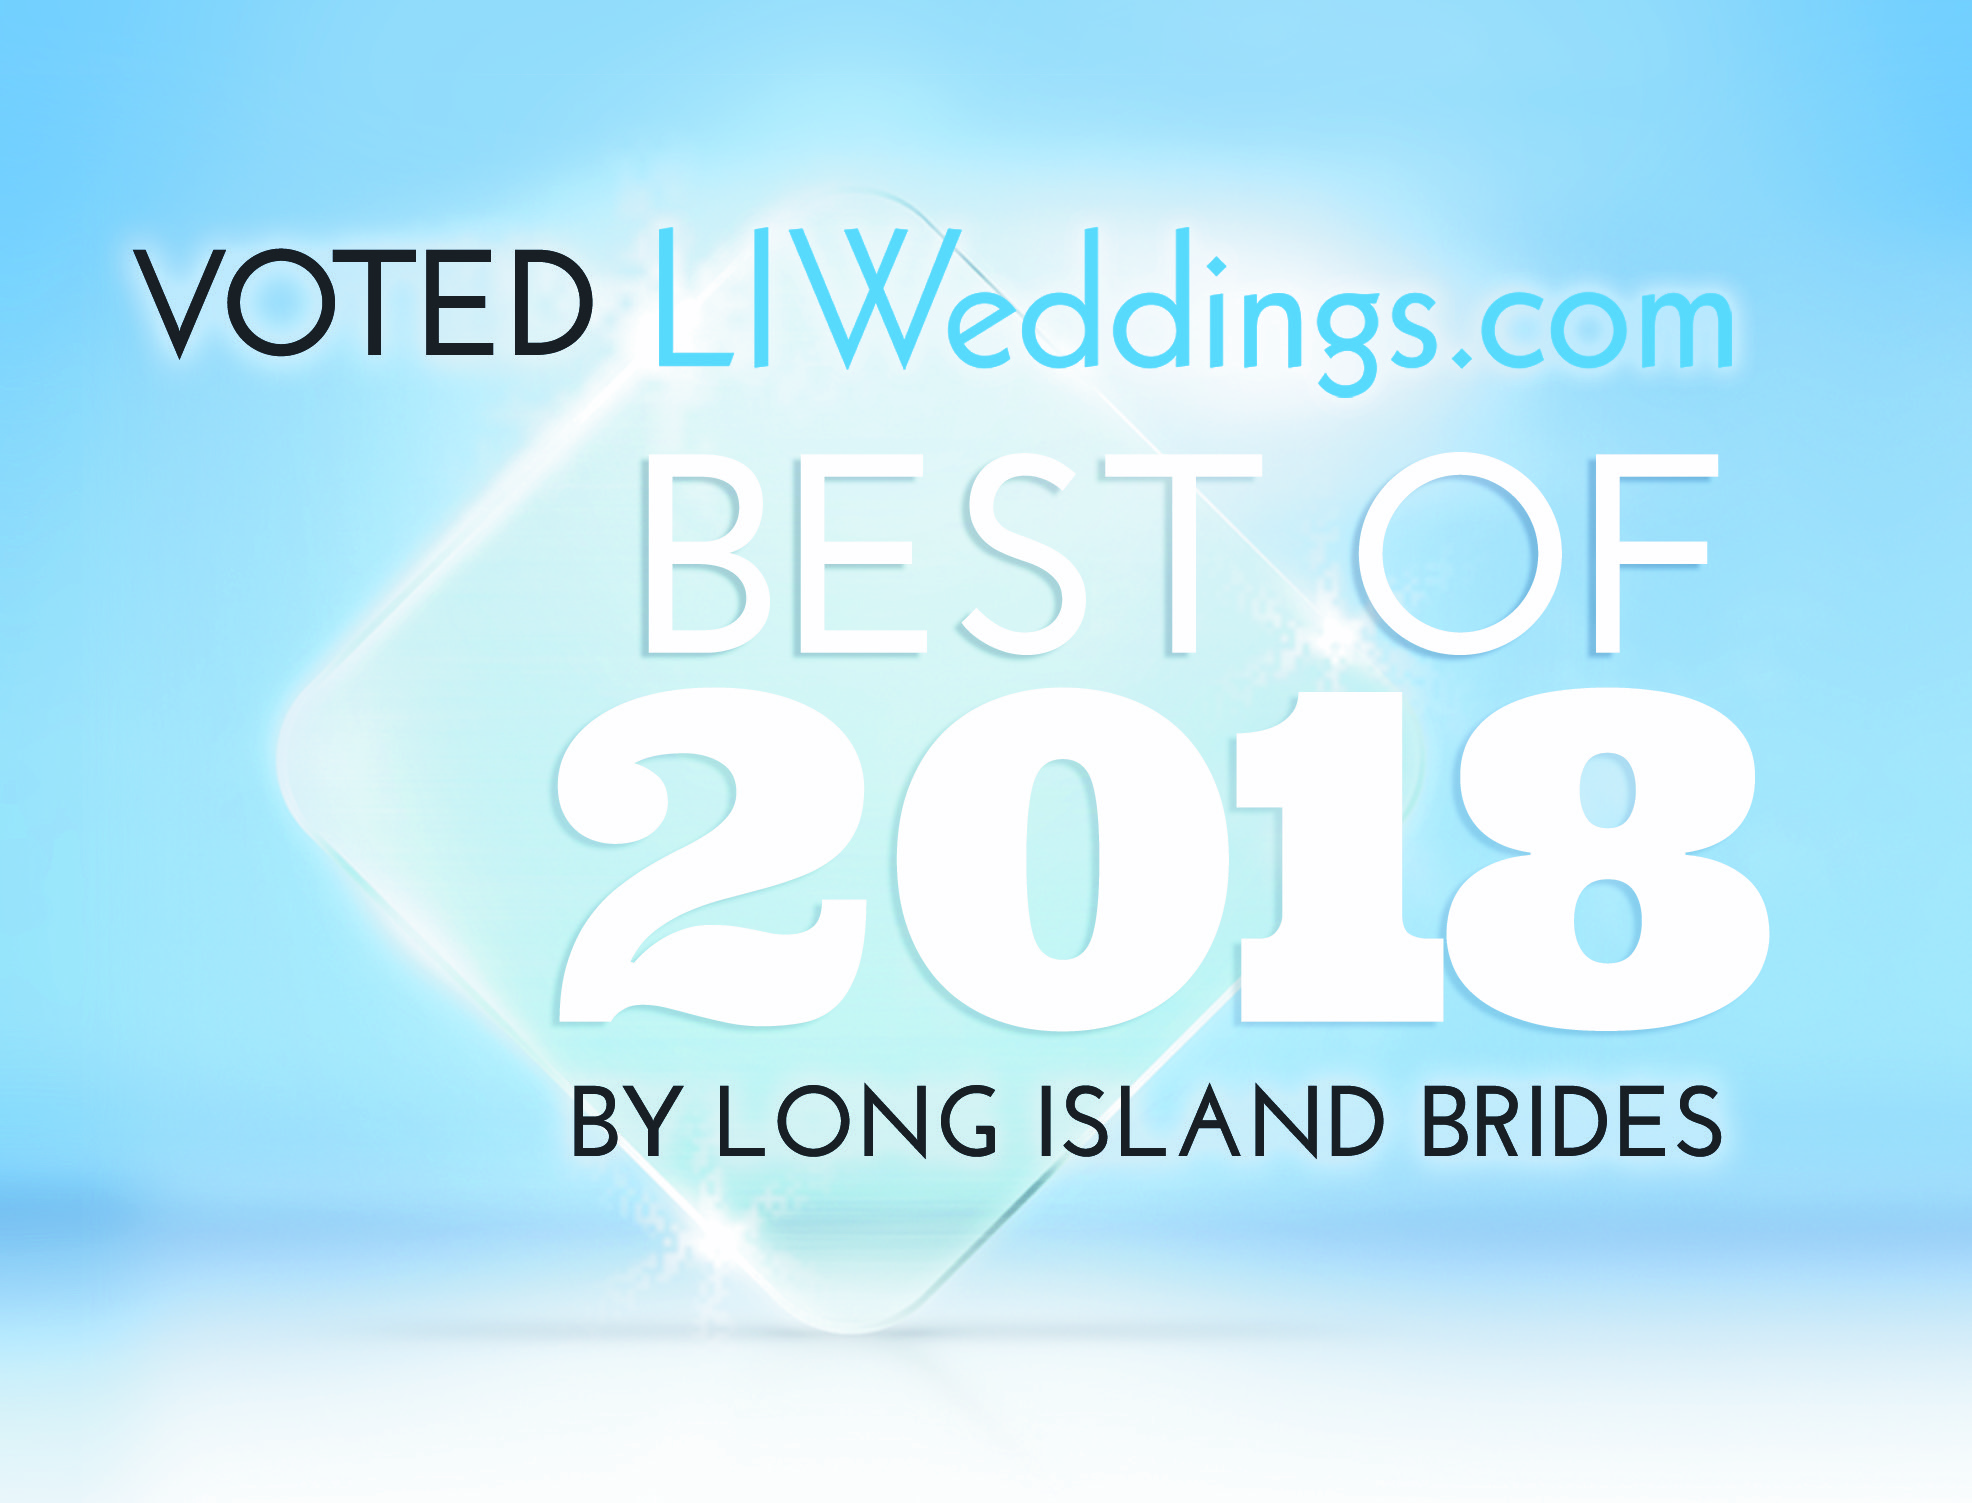 LIWeddings.com Best of 2018